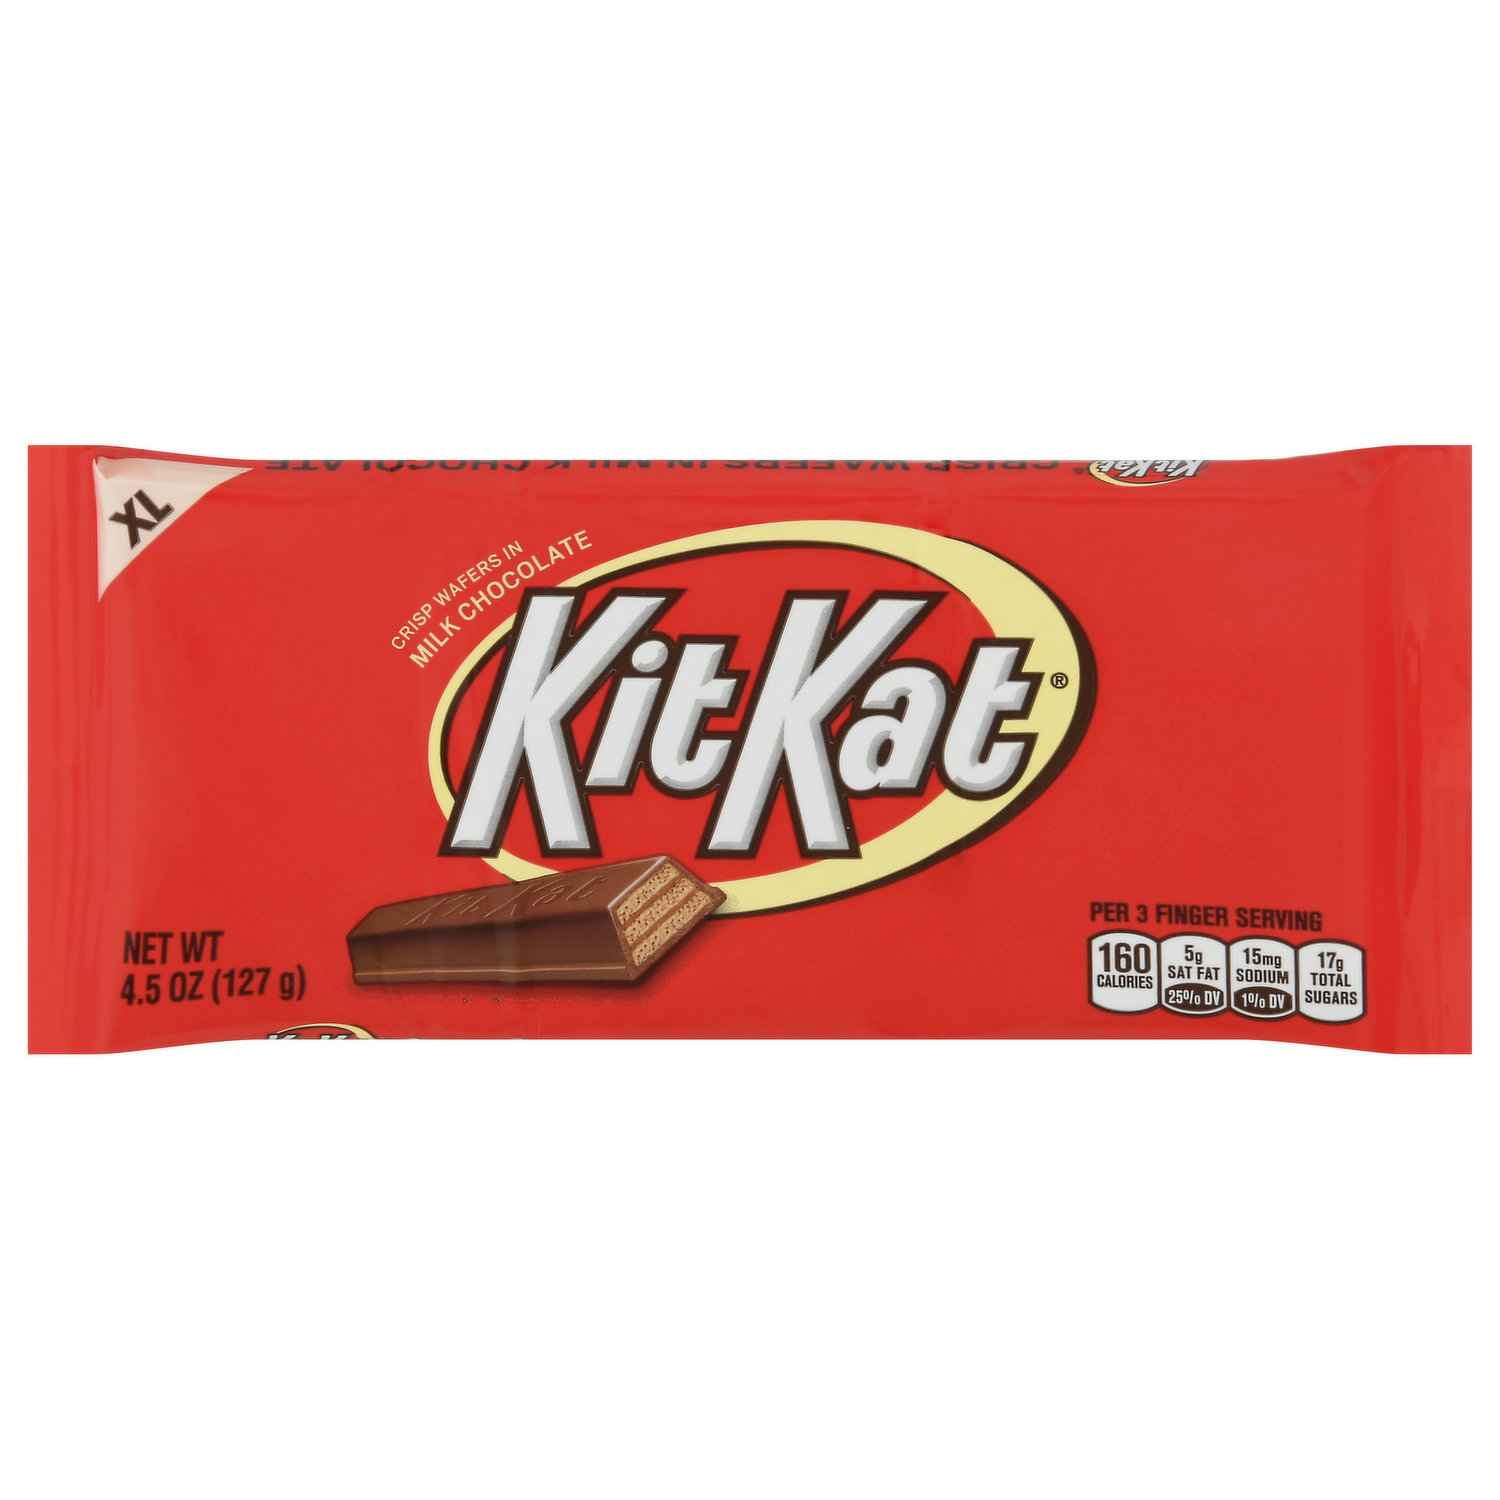 Kit Kat Crisp Wafers in Milk Chocolate, Unwrapped, Minis - 7.6 oz